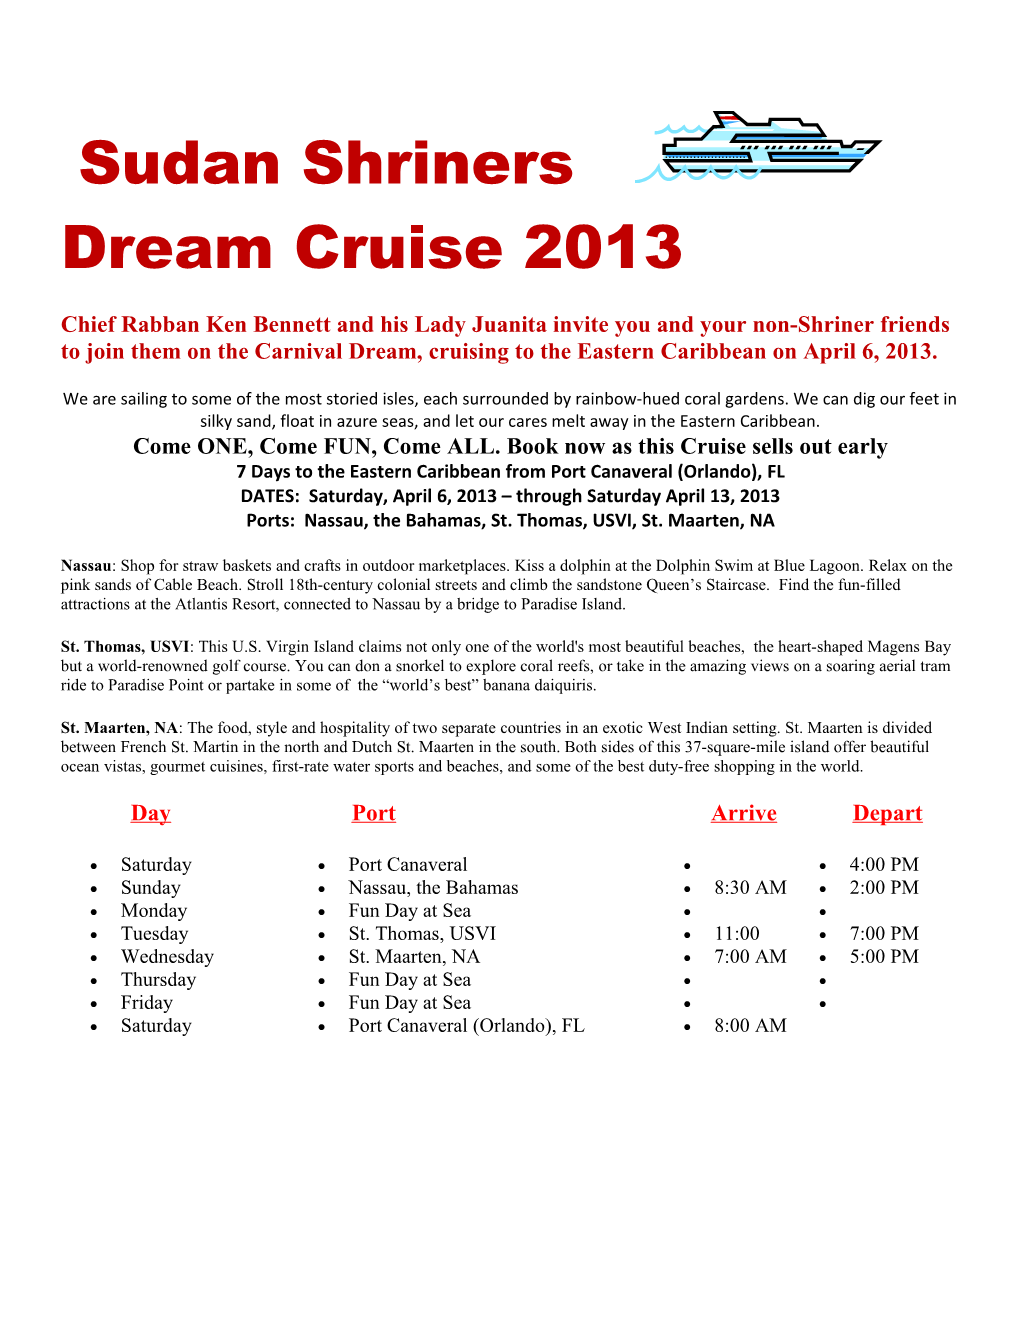 Sudan Shriners Dream Cruise 2013